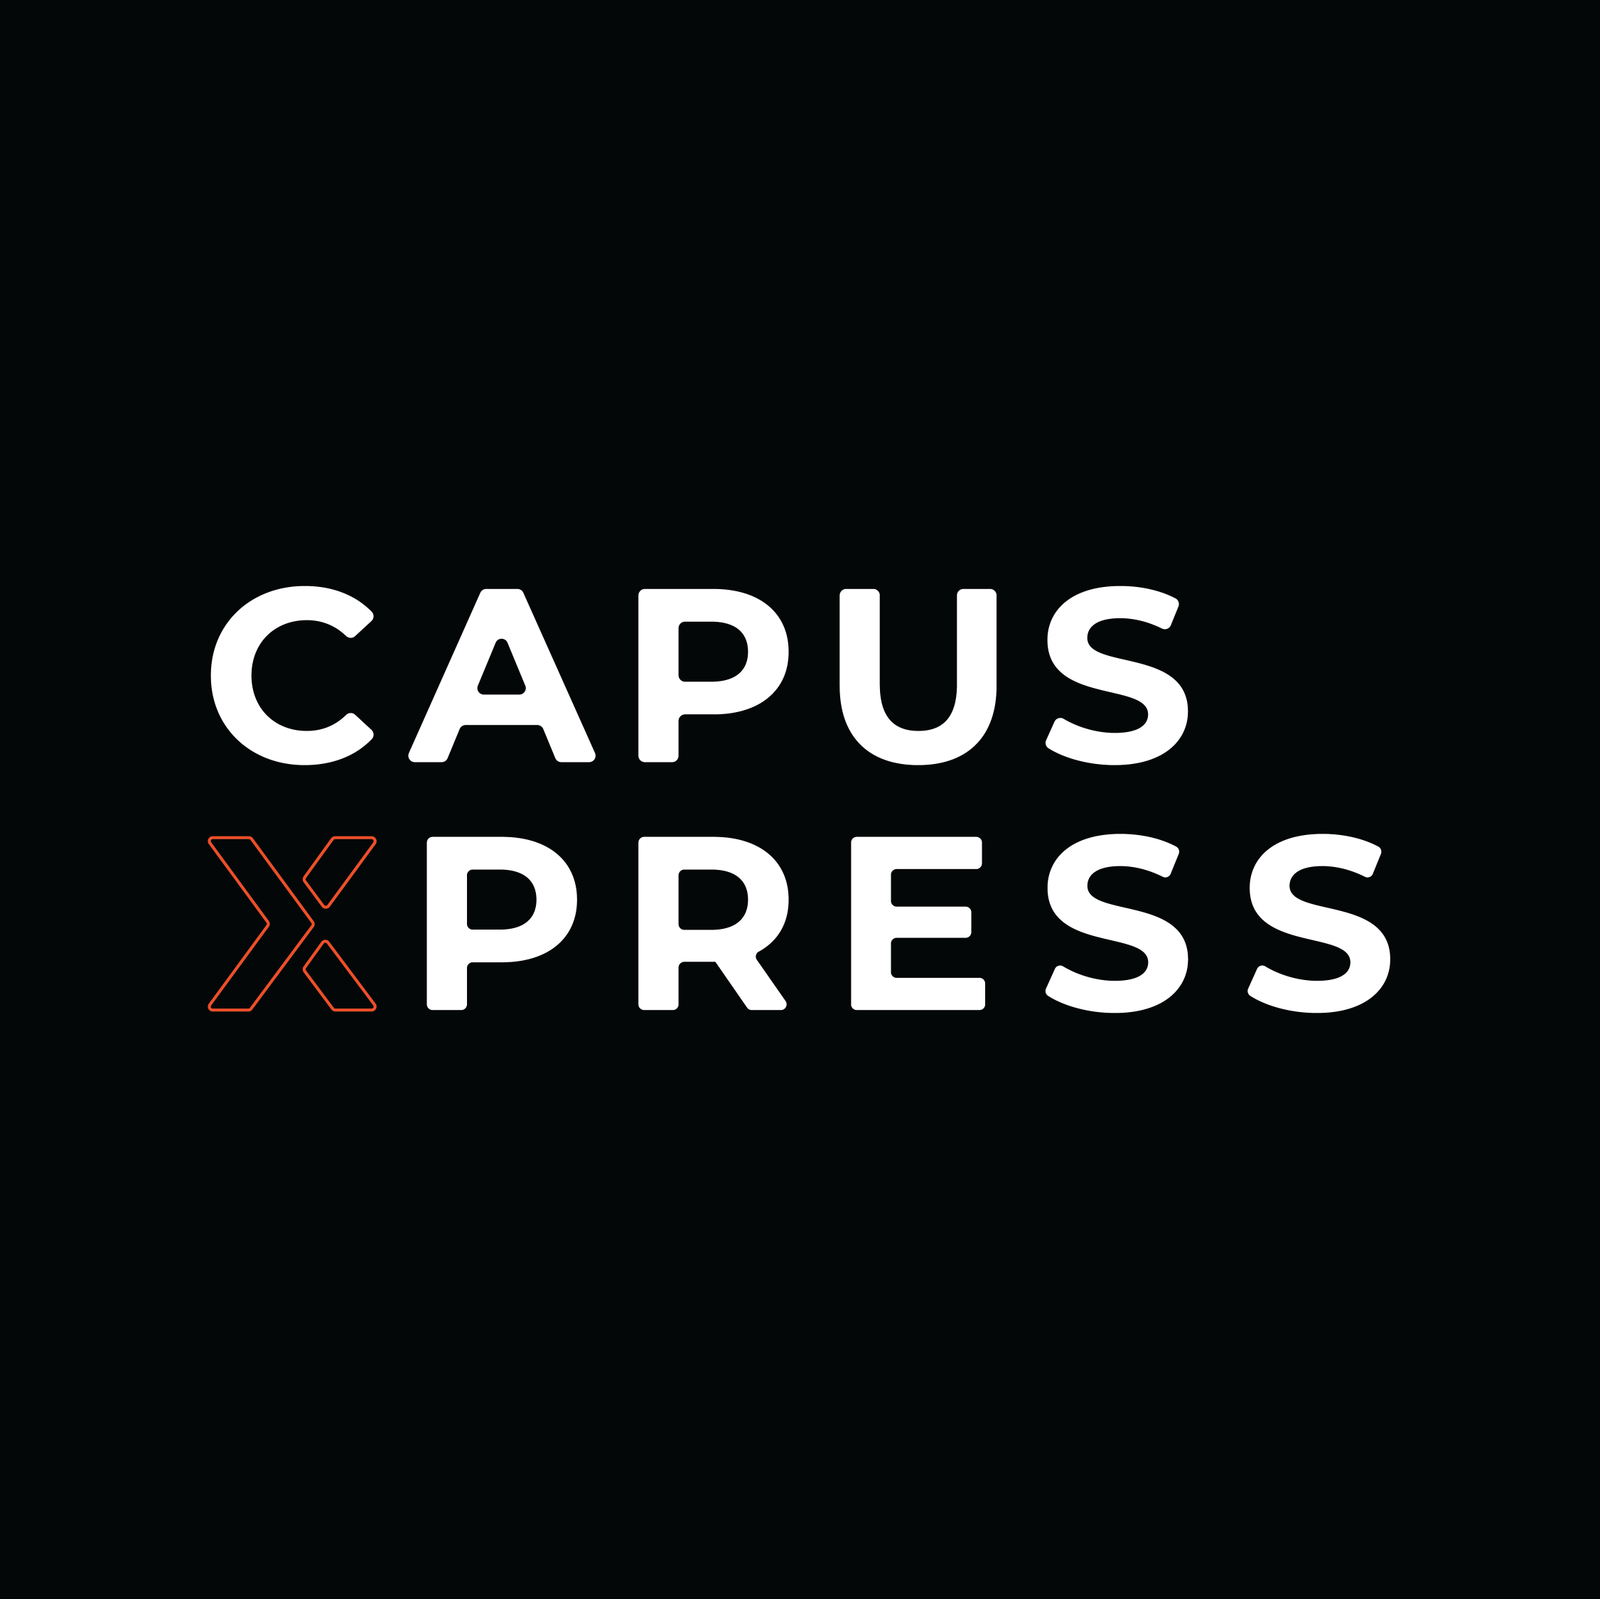 CAPUS EXPRESS AS